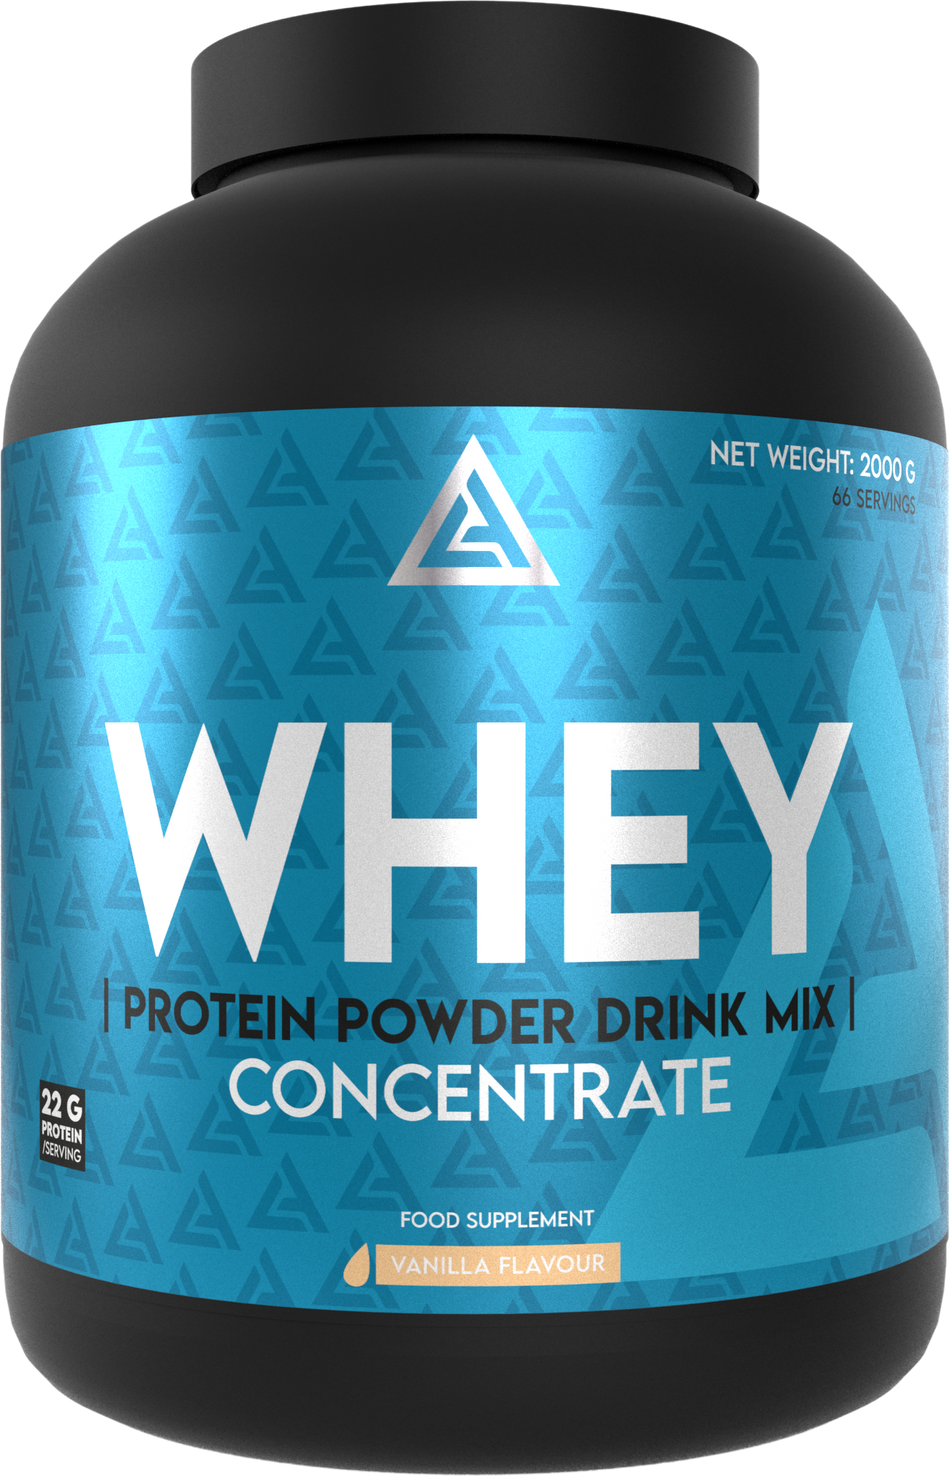 LA Whey Protein Concentrate | Premium Drink Mix